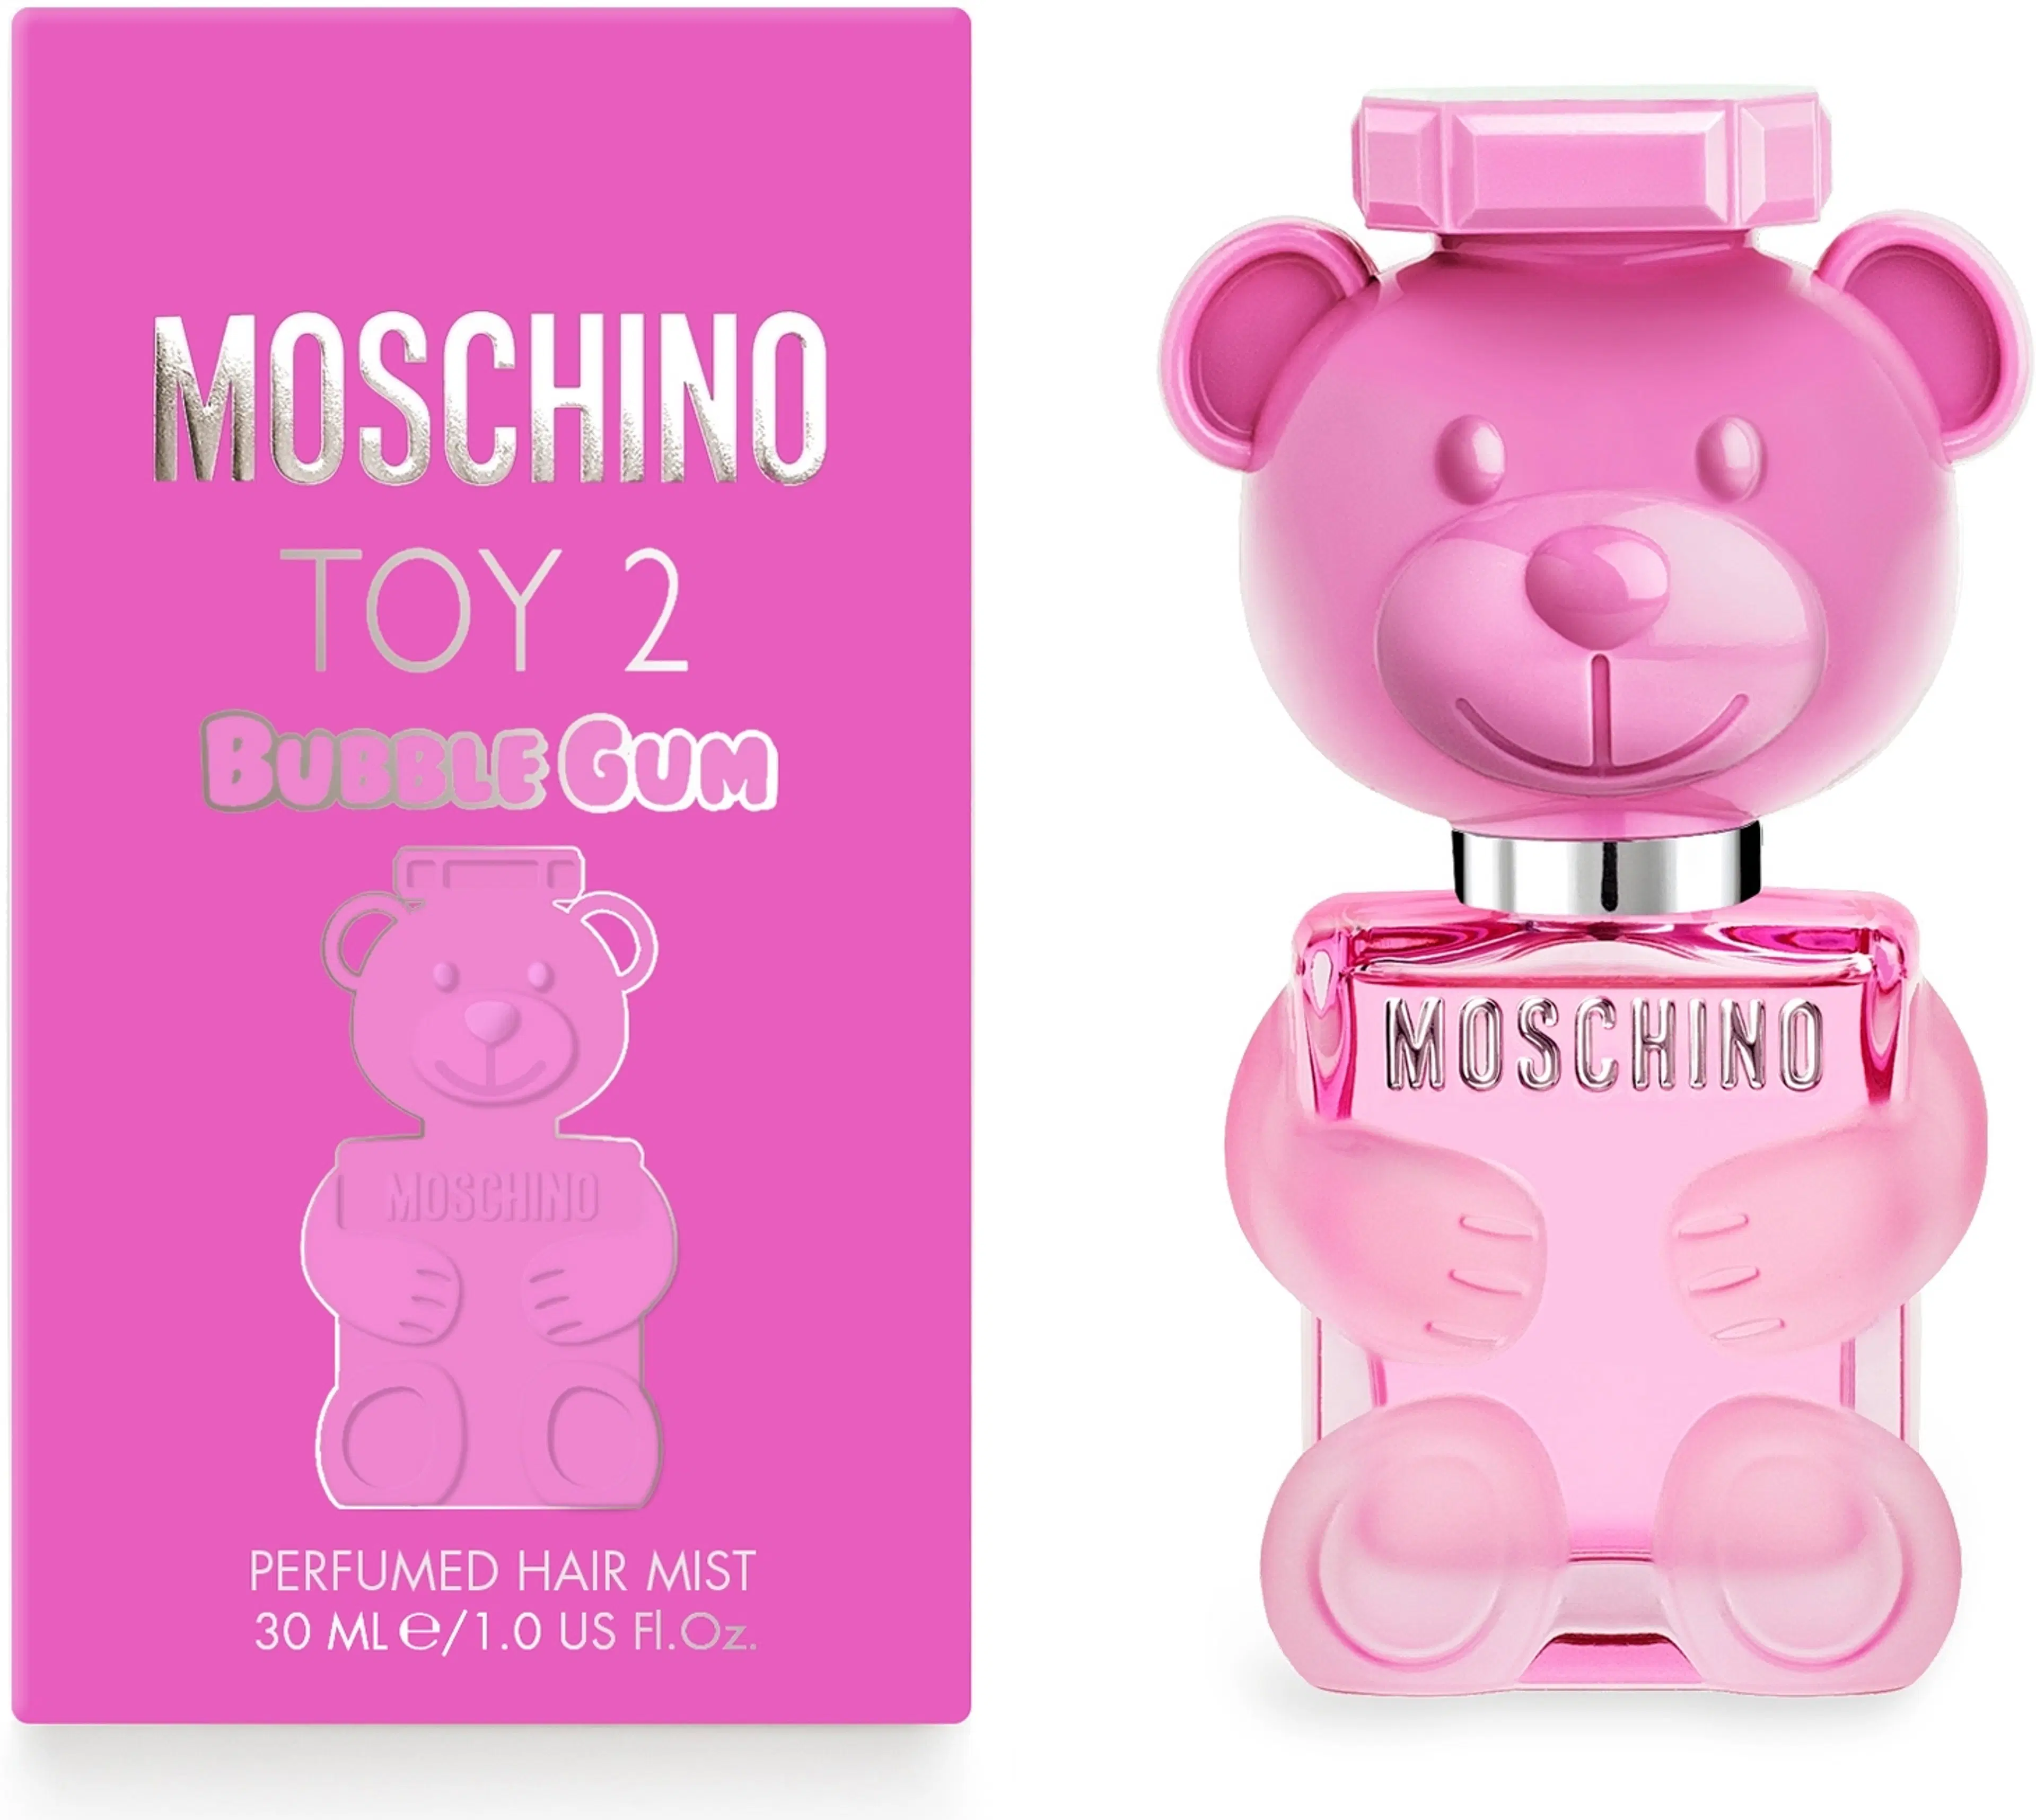 Moschino Toy 2 Bubble Gum Hair Mist hiustuoksu 30 ml